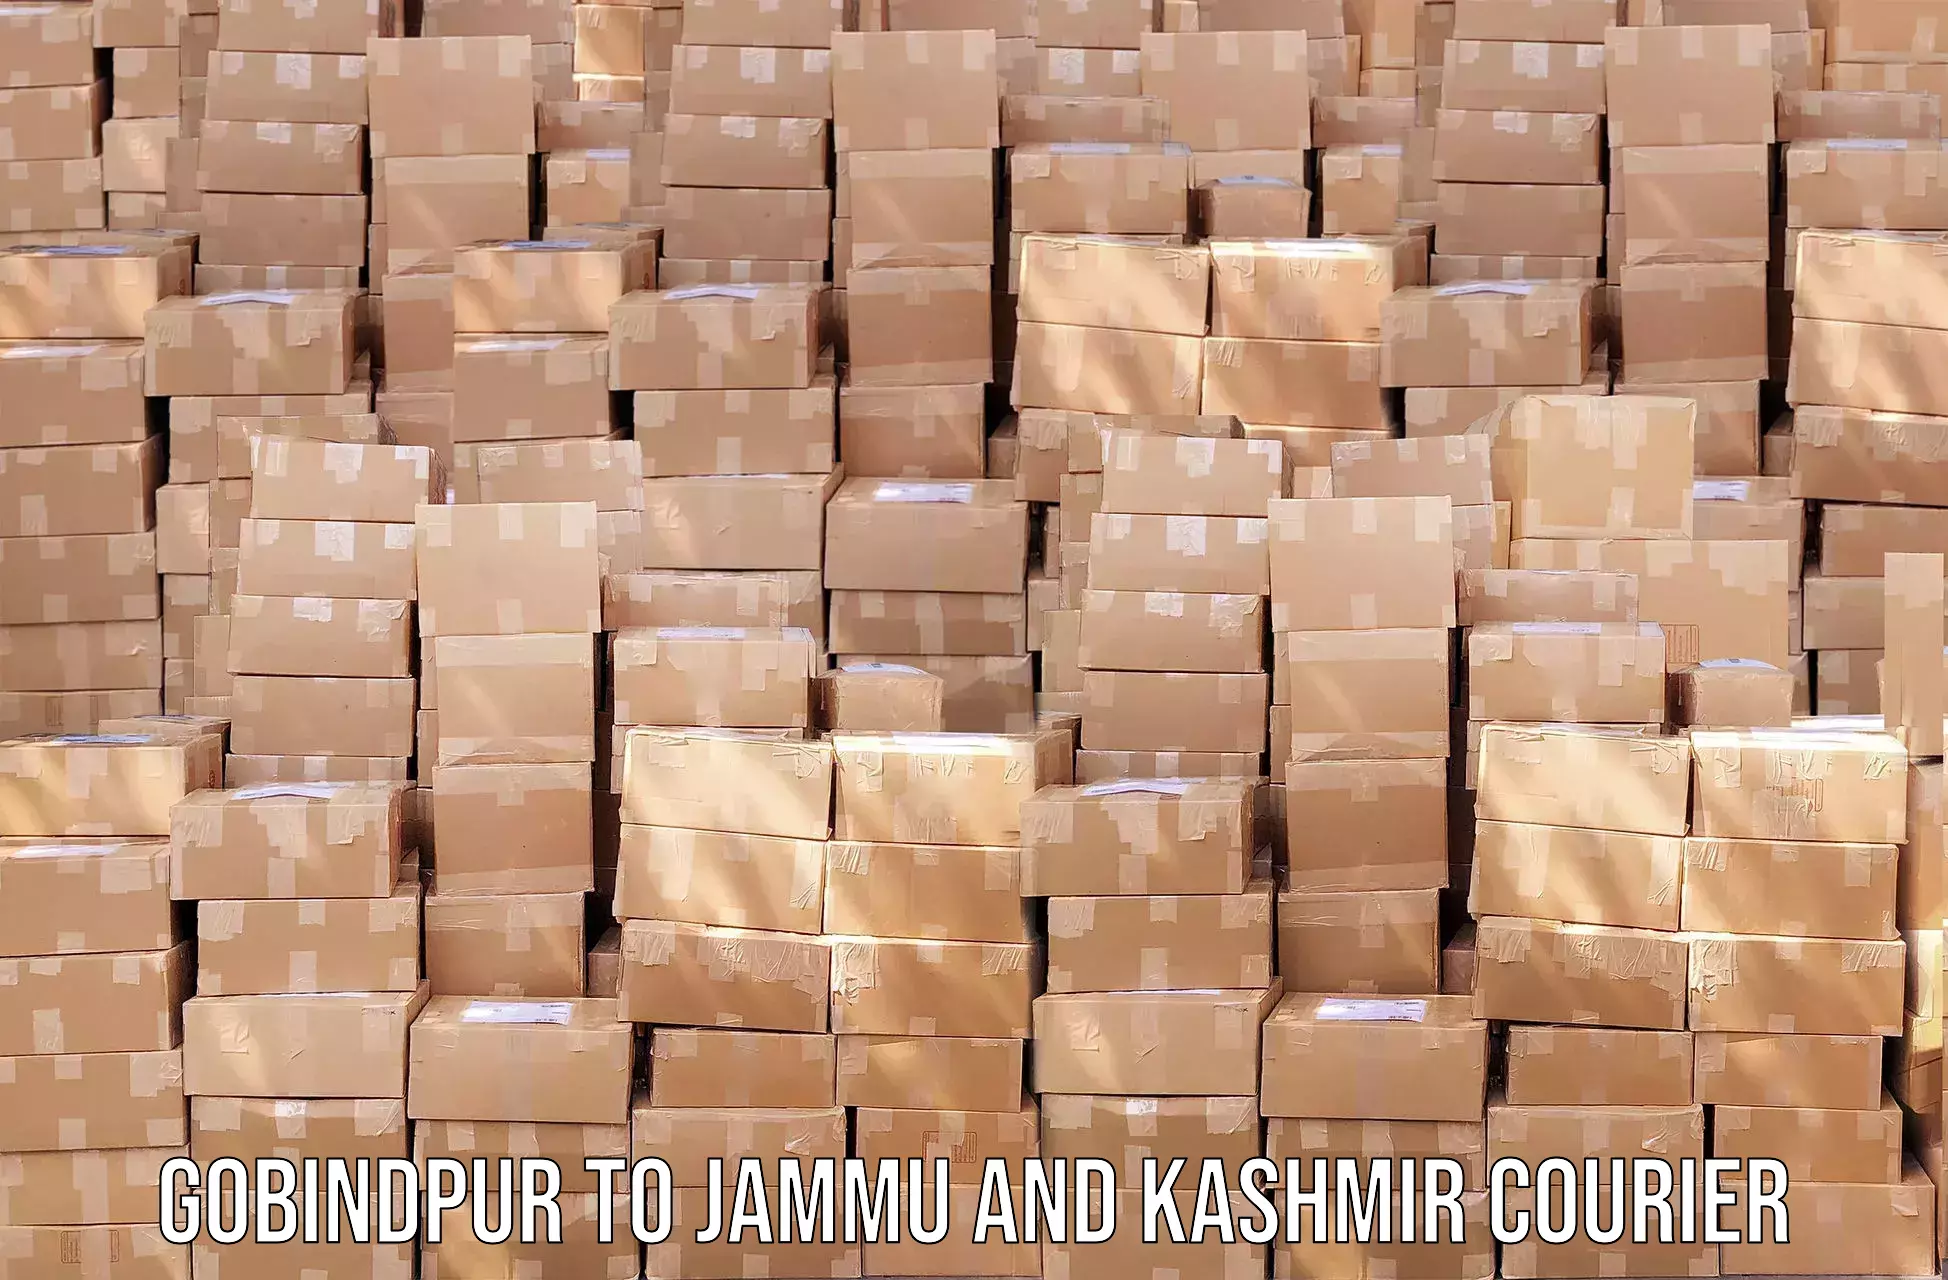 Supply chain efficiency Gobindpur to Kargil